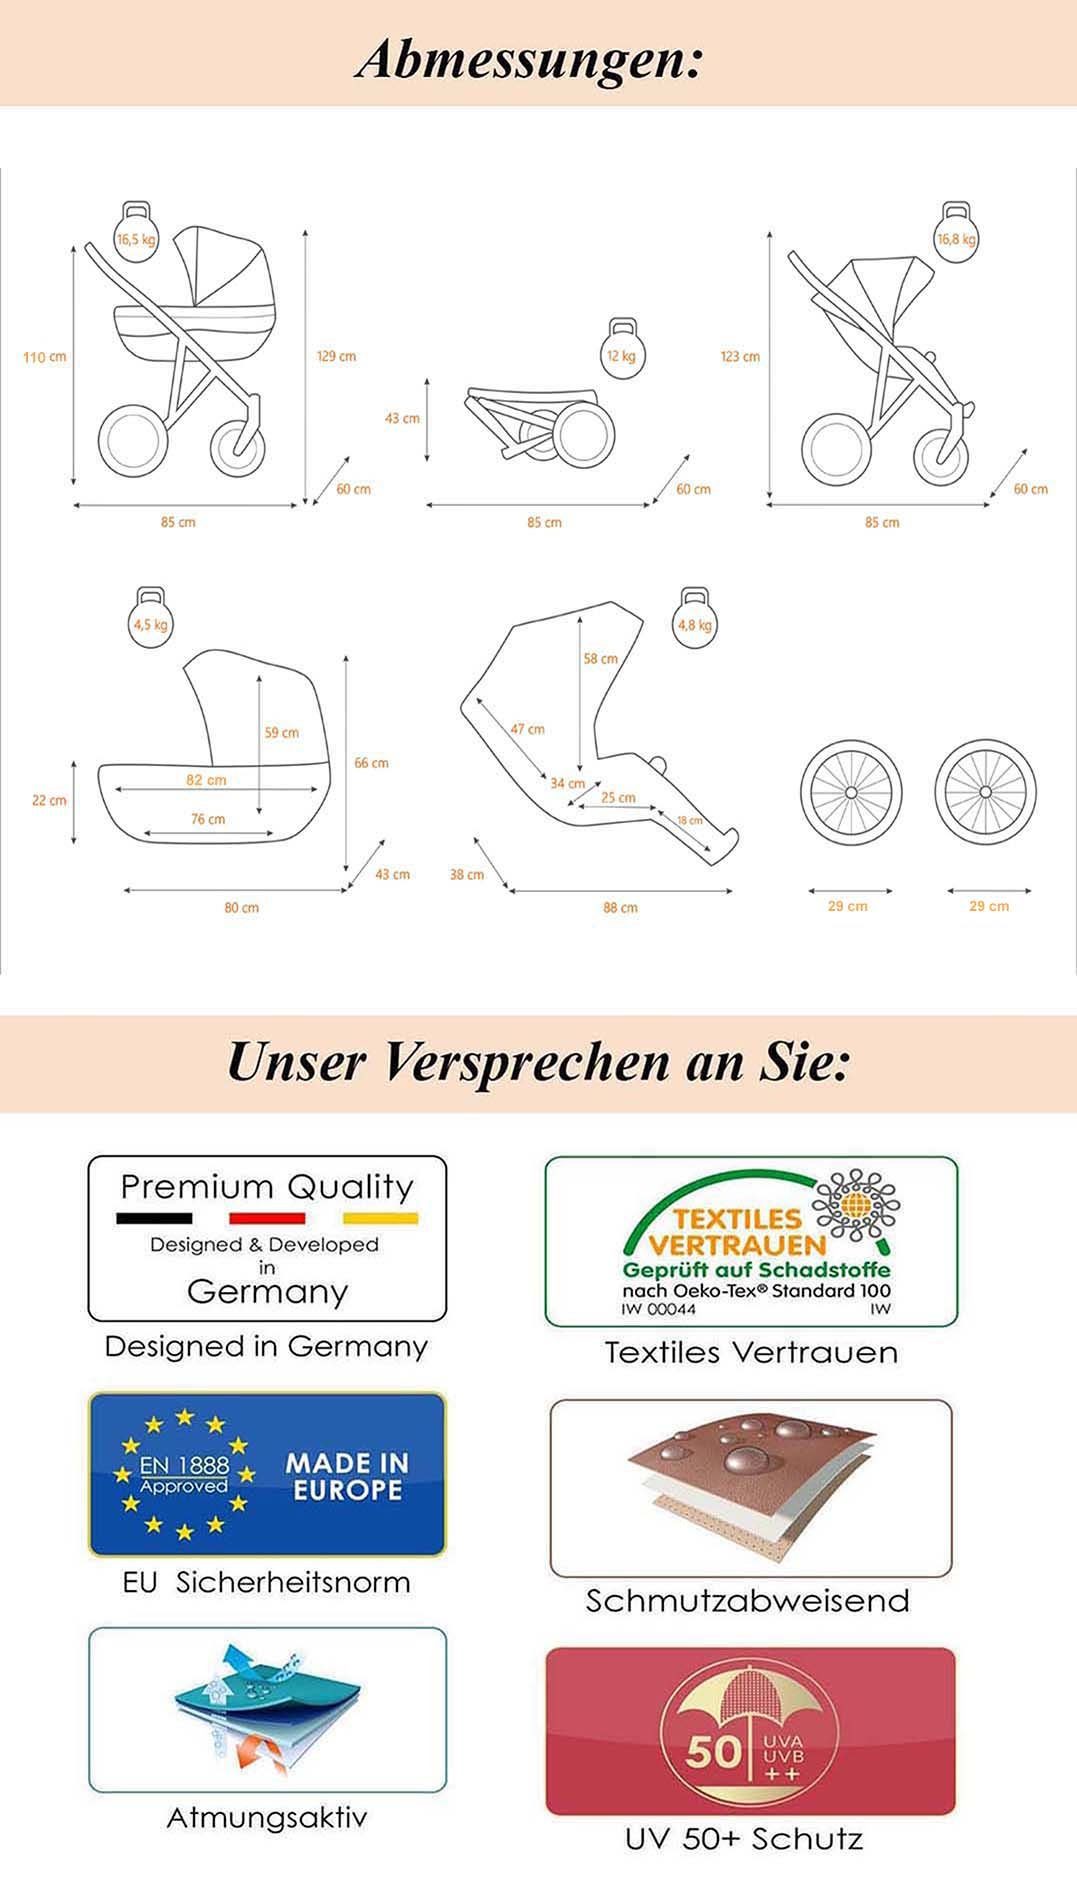 Teile in Designs - Kombi-Kinderwagen inkl. 13 - in 1 babies-on-wheels 3 Sorento Beige-Braun Autositz 10